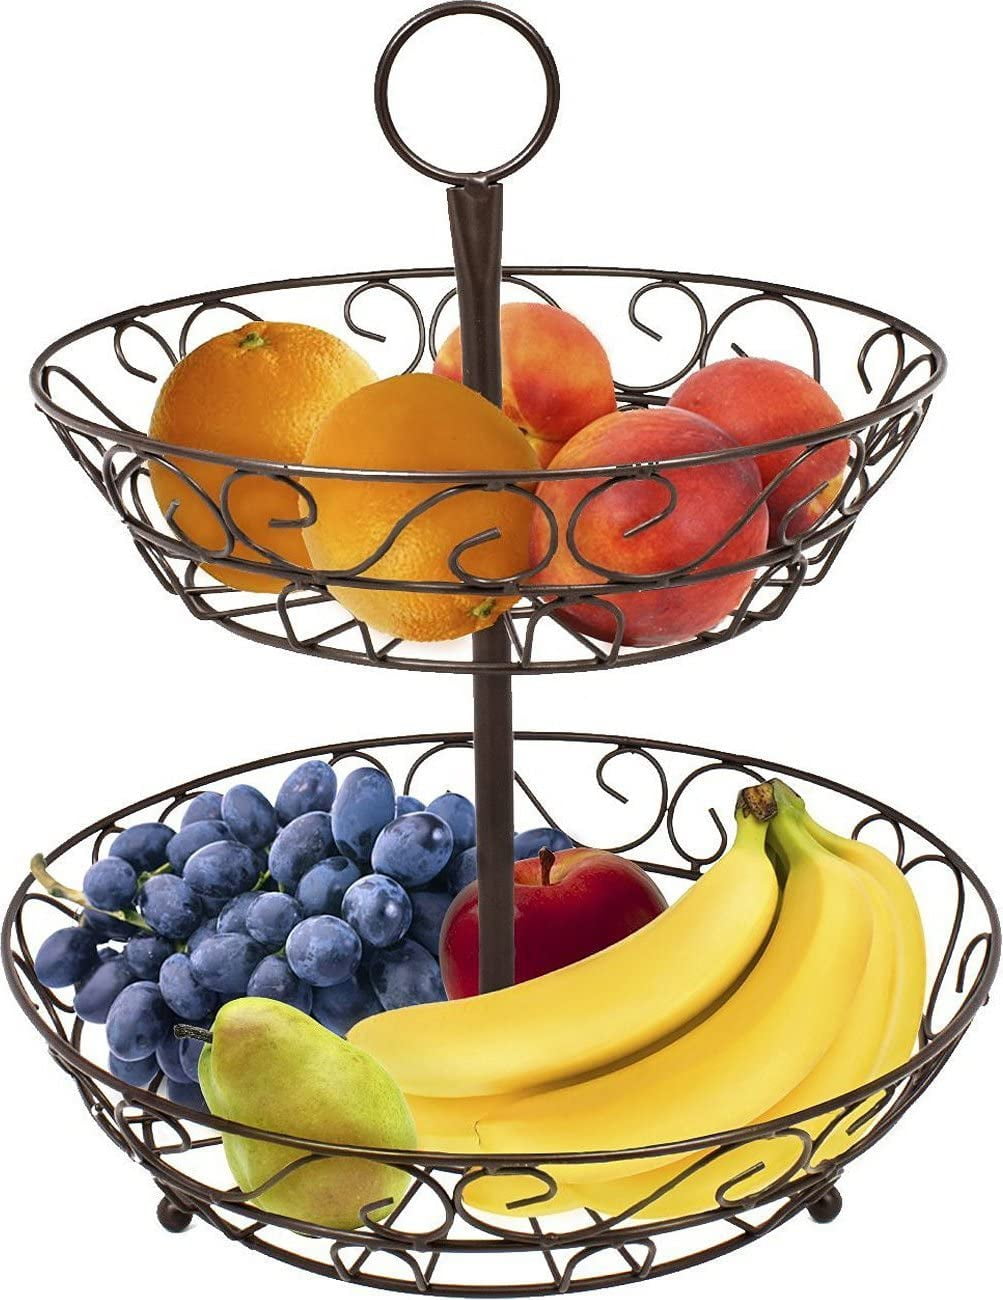 2 Tier Countertop Fruit Basket for Kitchen Vegetable Fruits Basket Bowl Stand Me 